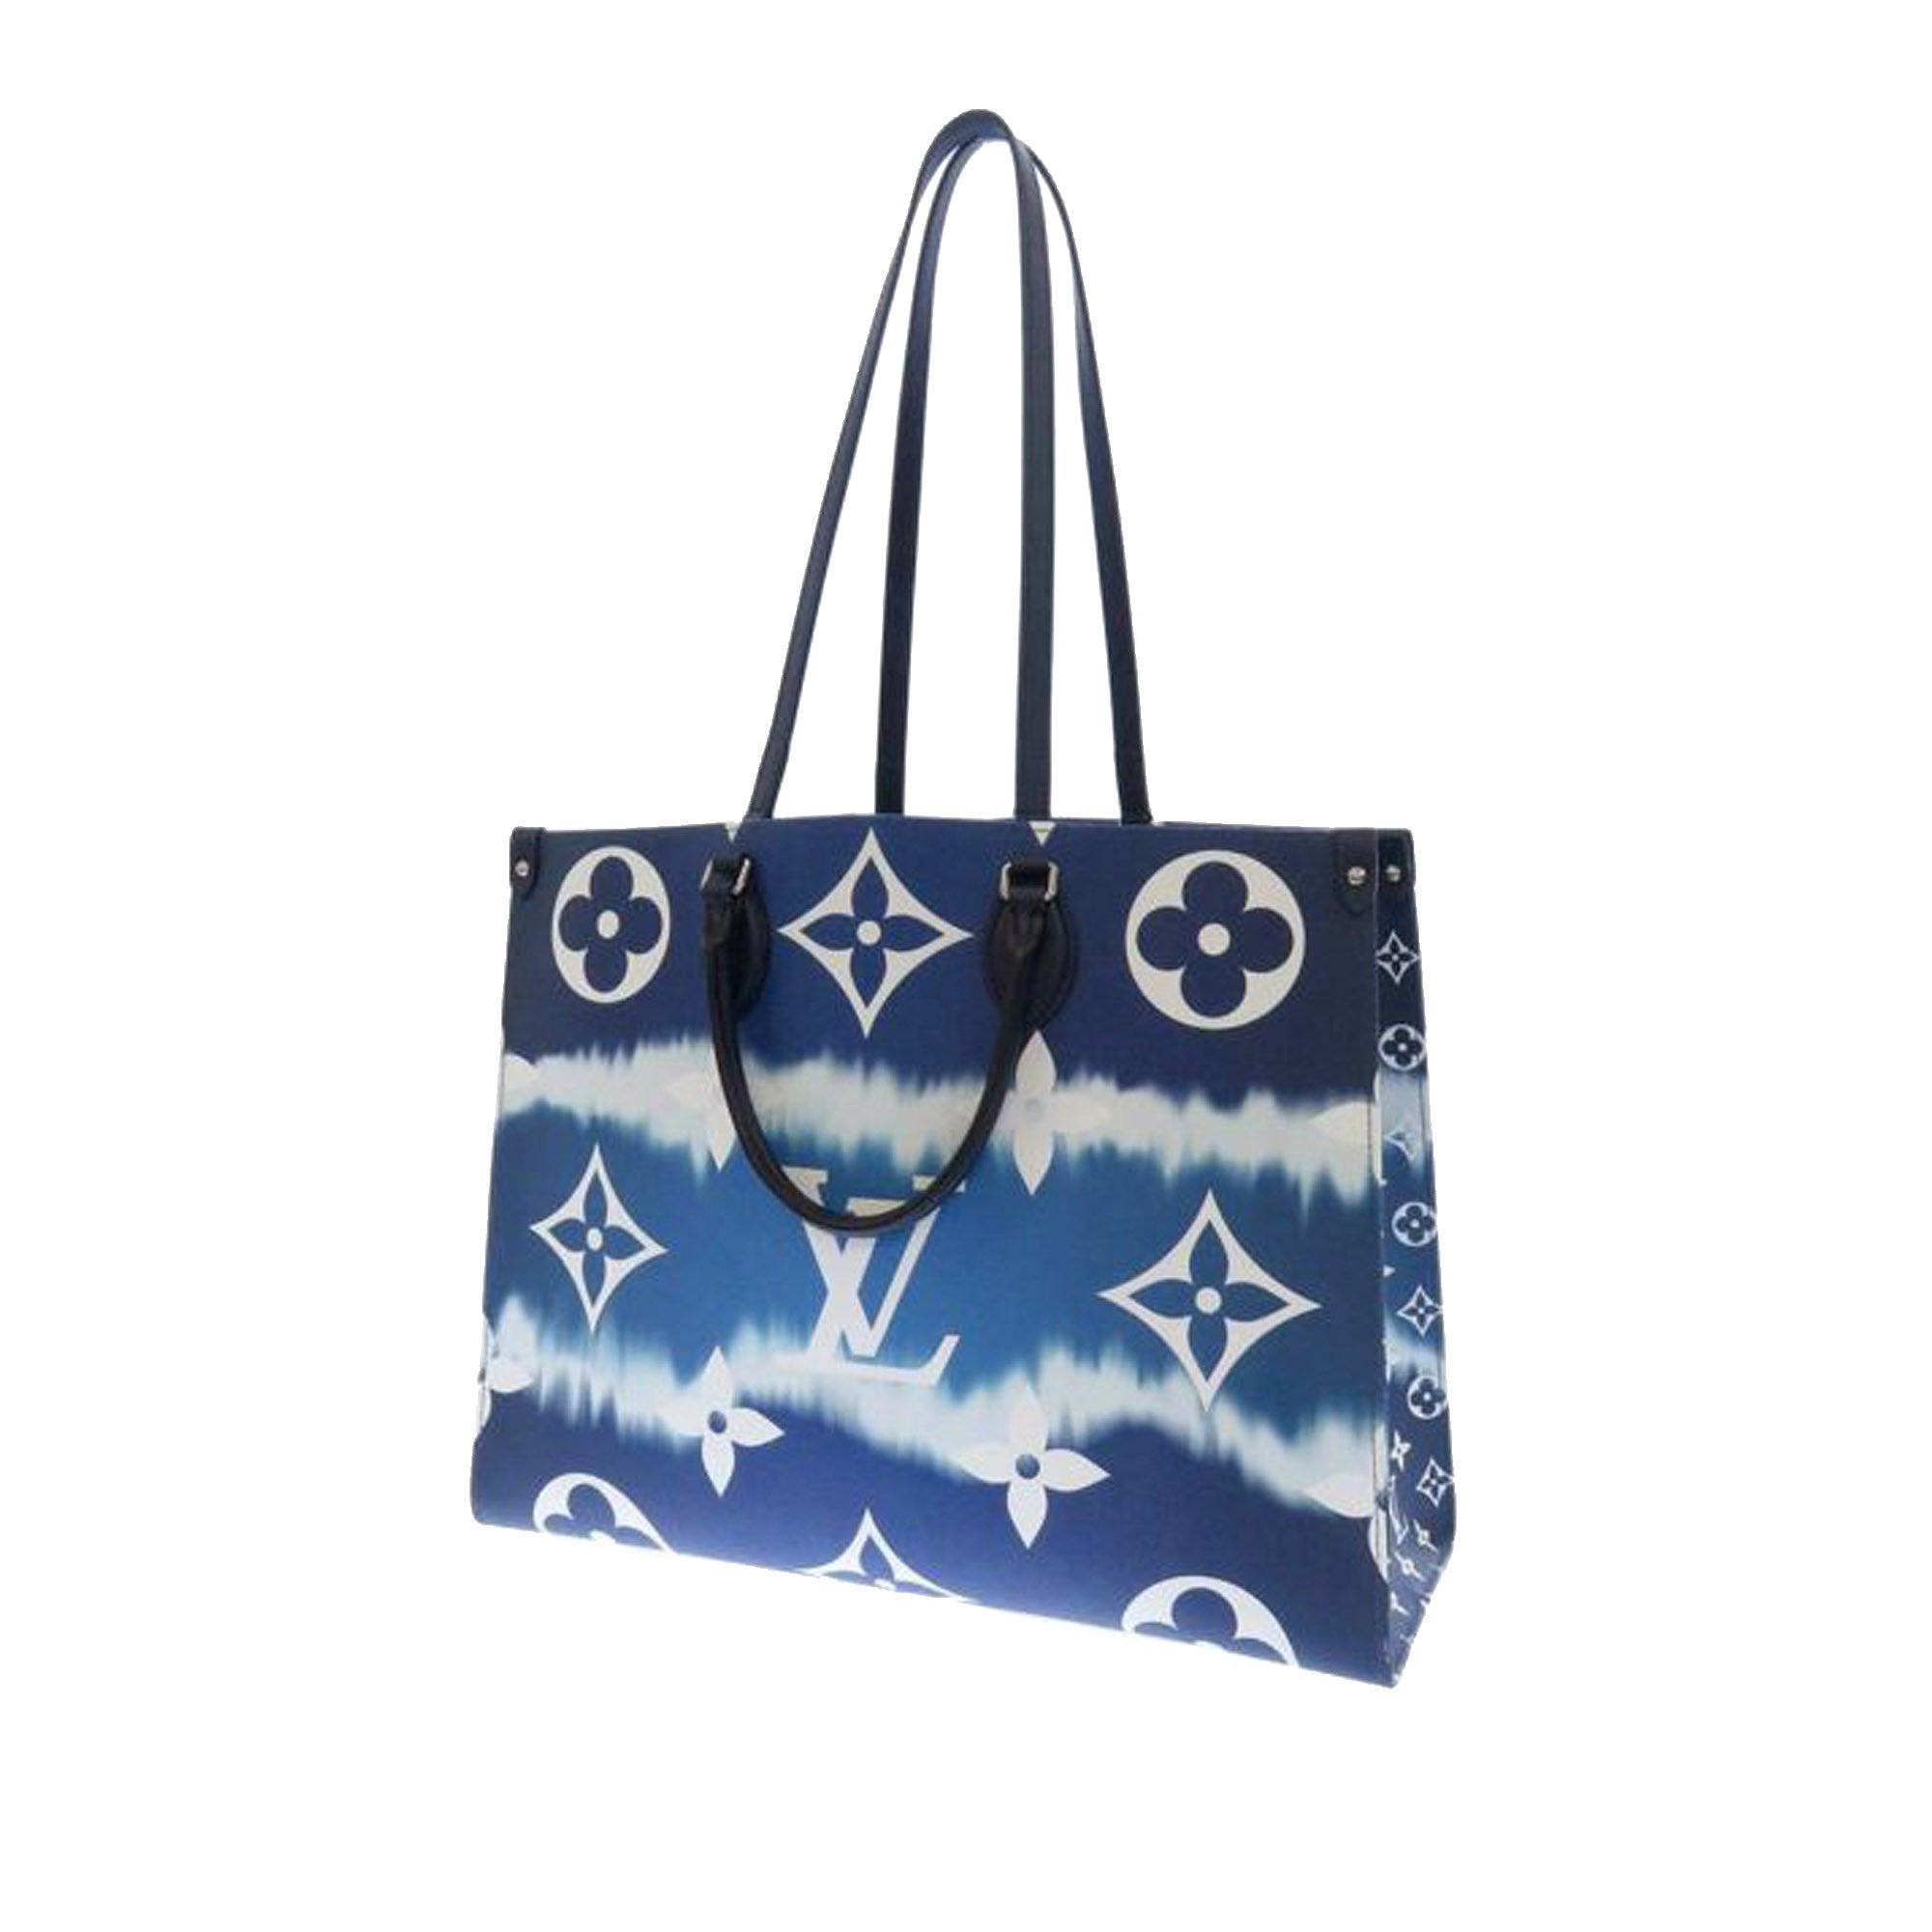 LV onthego gm blue  Bags, Louis vuitton bag, Louis vuitton limited edition